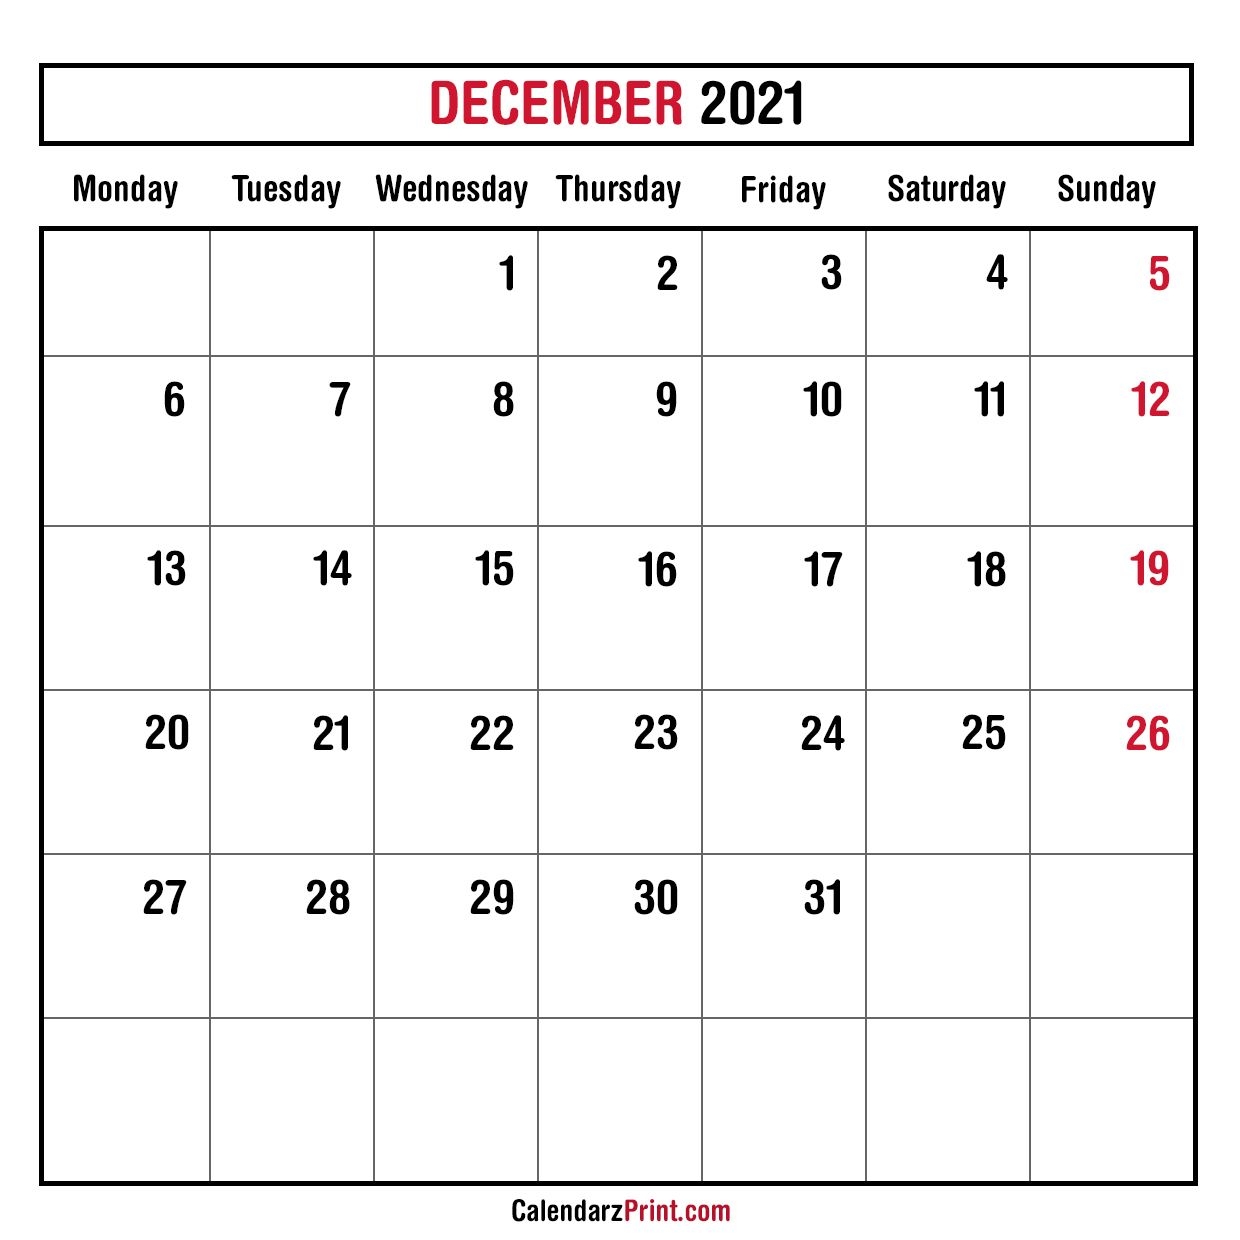 December 2021 Monthly Planner Calendar, Printable Free